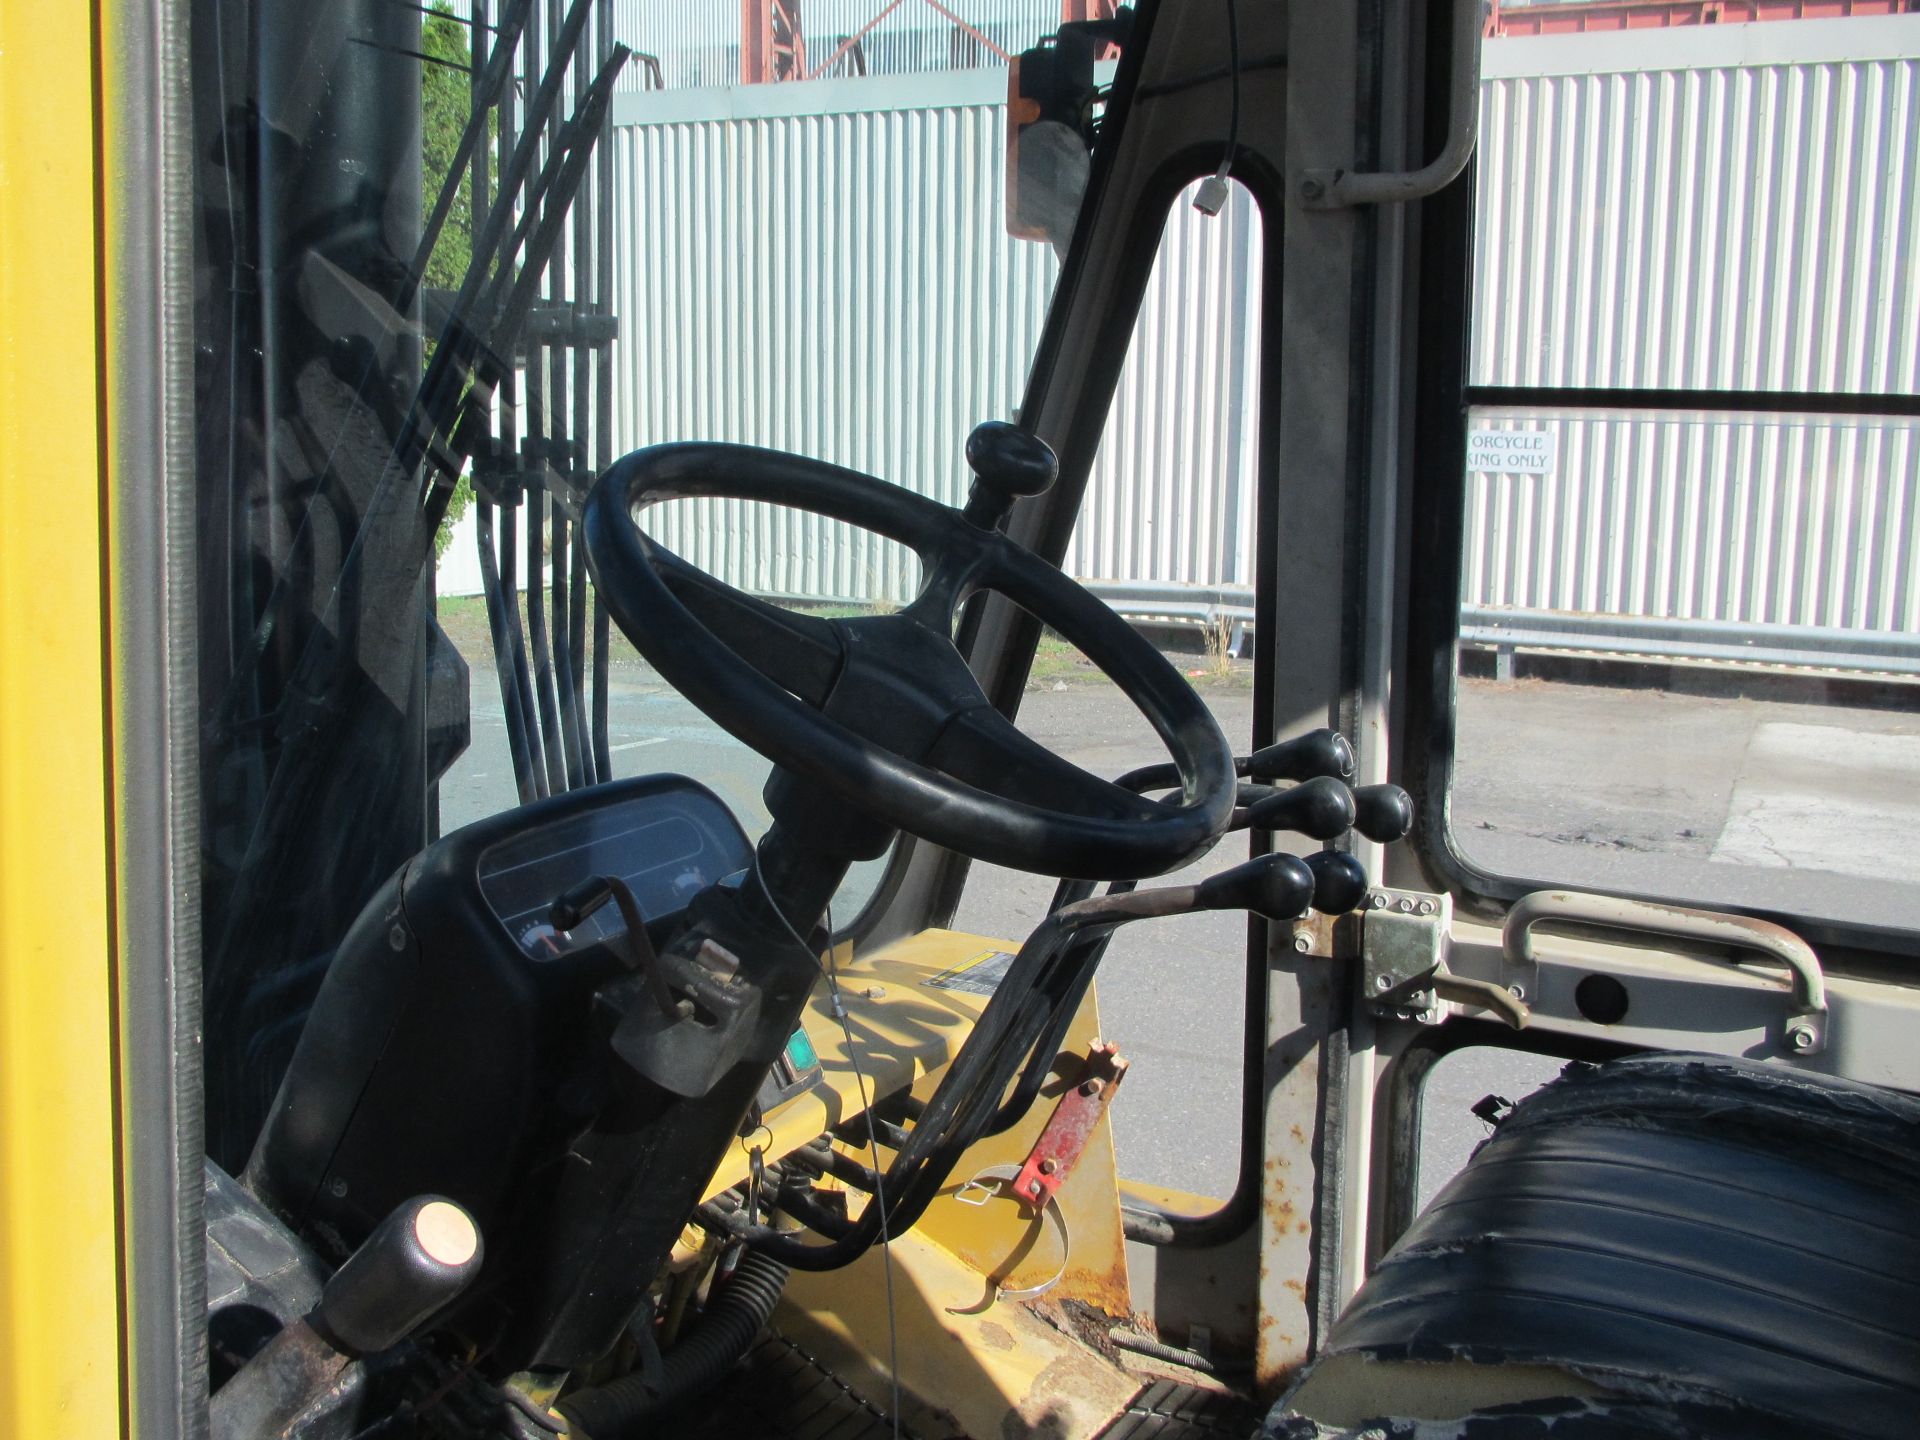 Caterpillar DP135 30,000 lb Forklift - Image 10 of 14